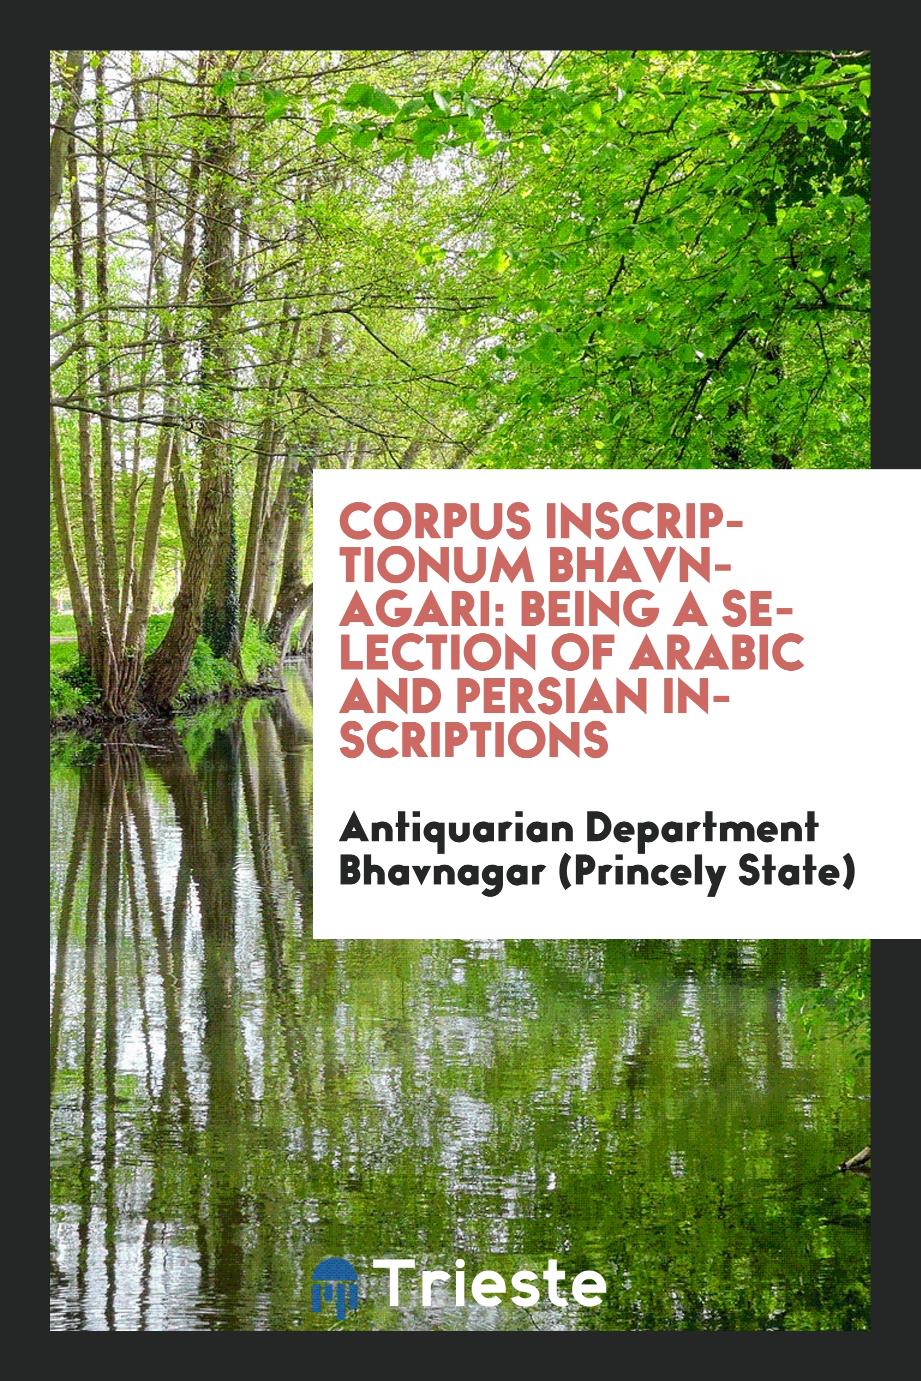 Corpus Inscriptionum Bhavnagari: Being a Selection of Arabic and Persian Inscriptions